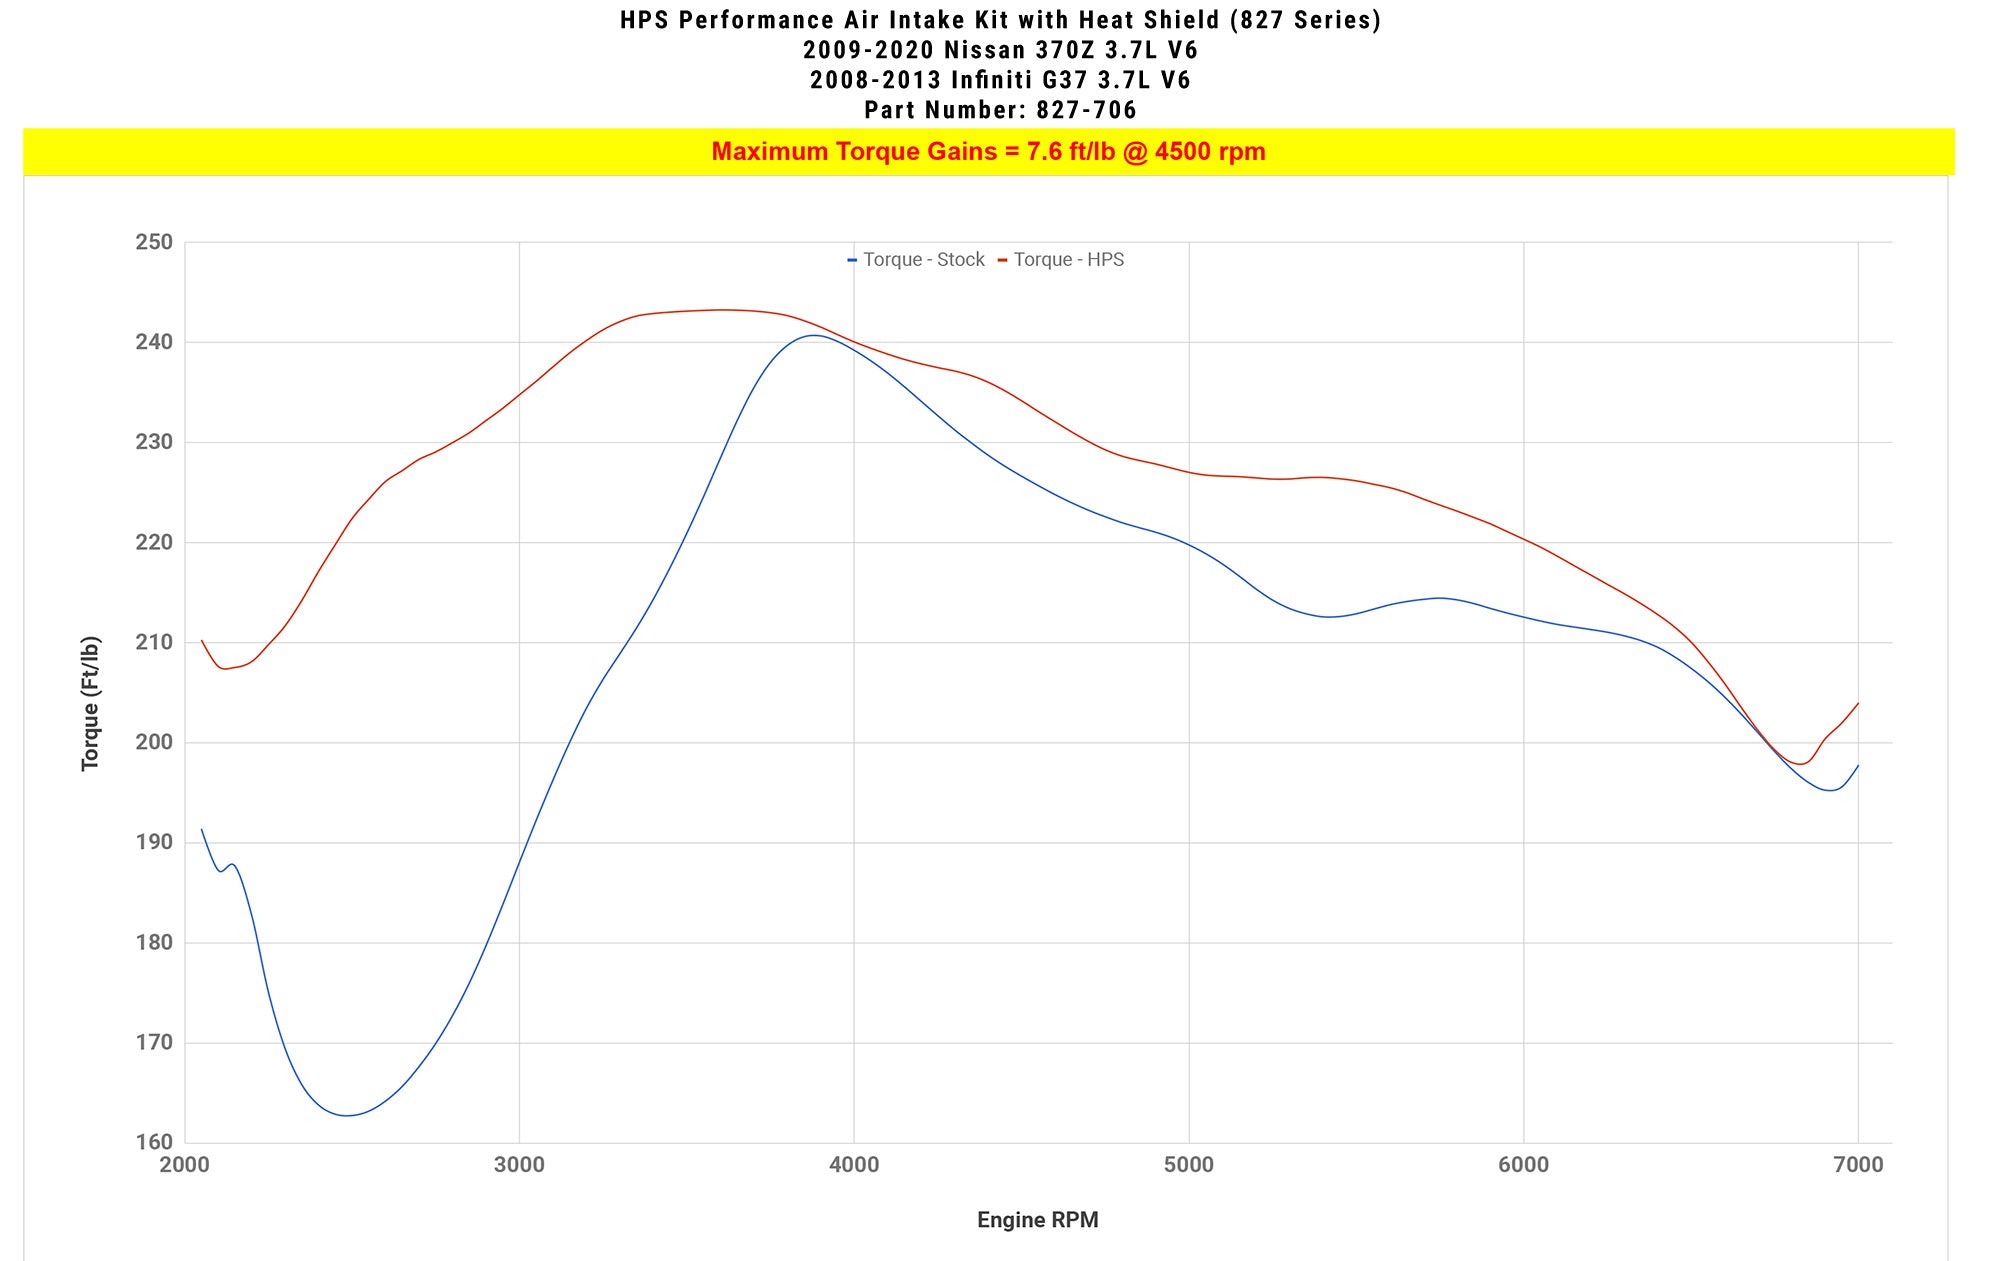 HPS Shortram Air Intake Kit 827-706 increase torque +7.6 ft/lbs on 2009-2020 Nissan 370Z 3.7L V6 Z34